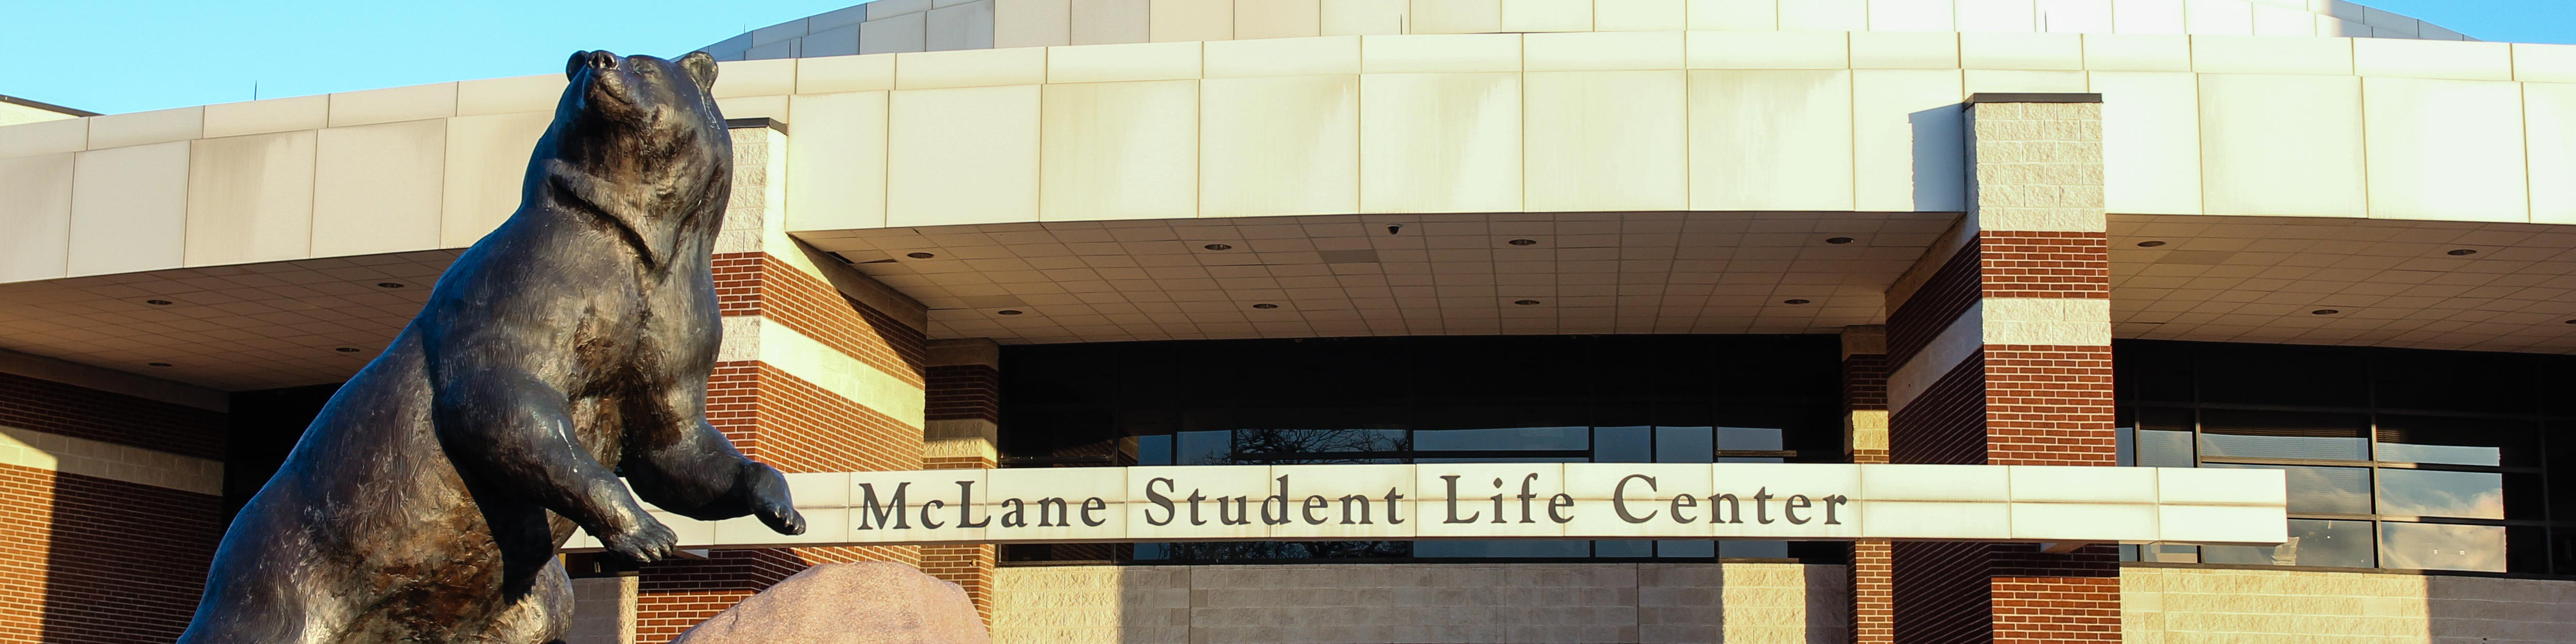 McLane Student Life Center